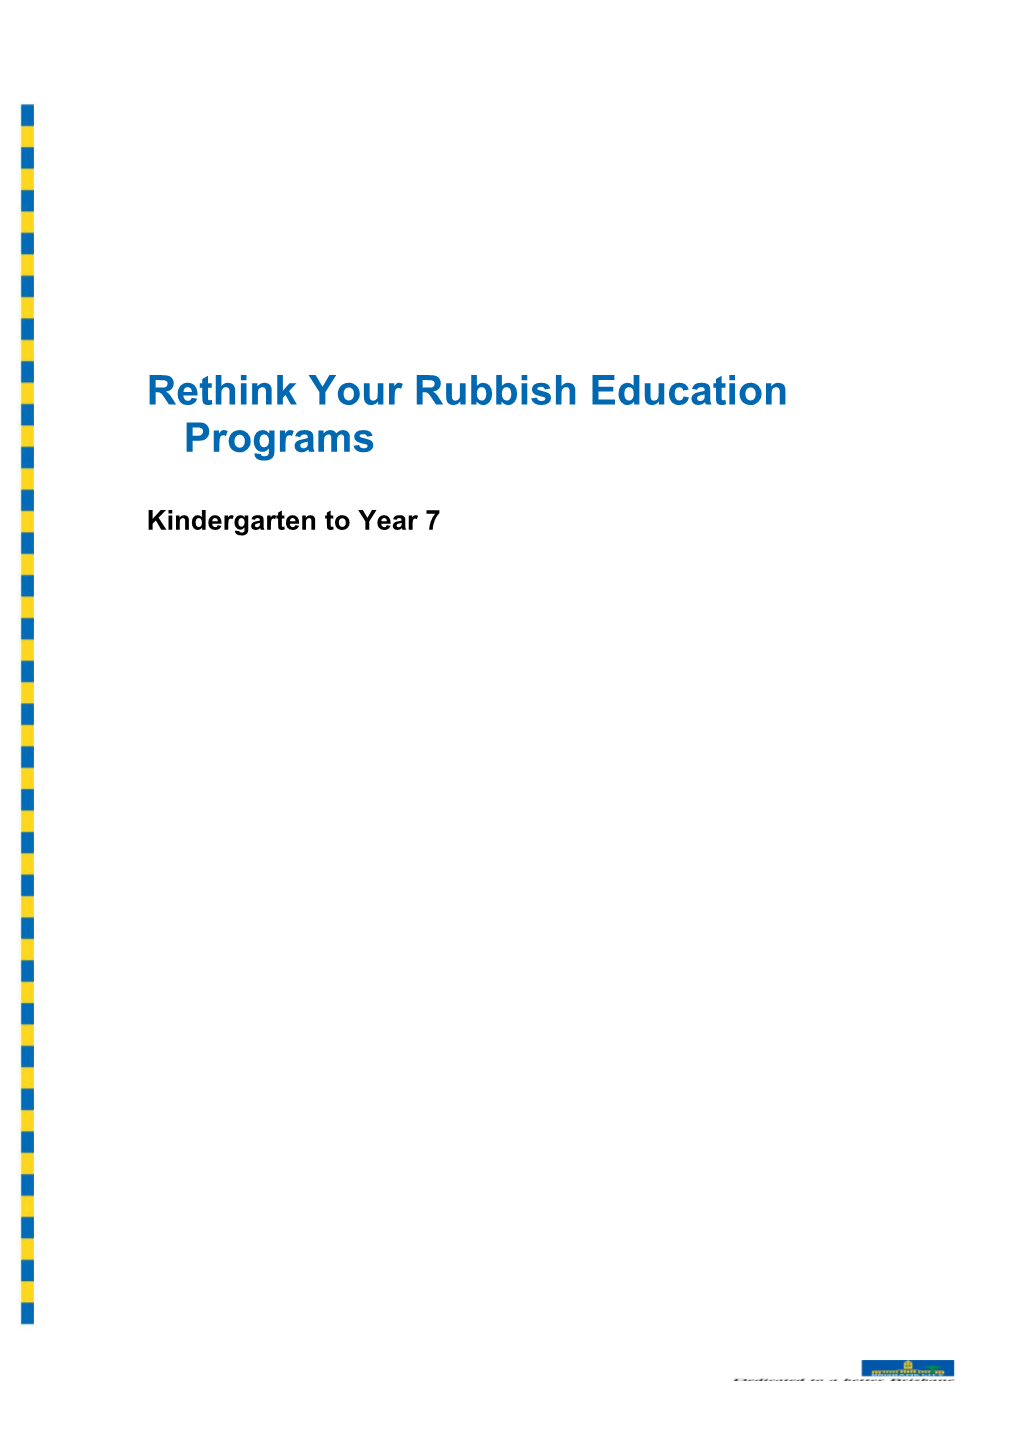 Rethink Your Rubbish Education Programs